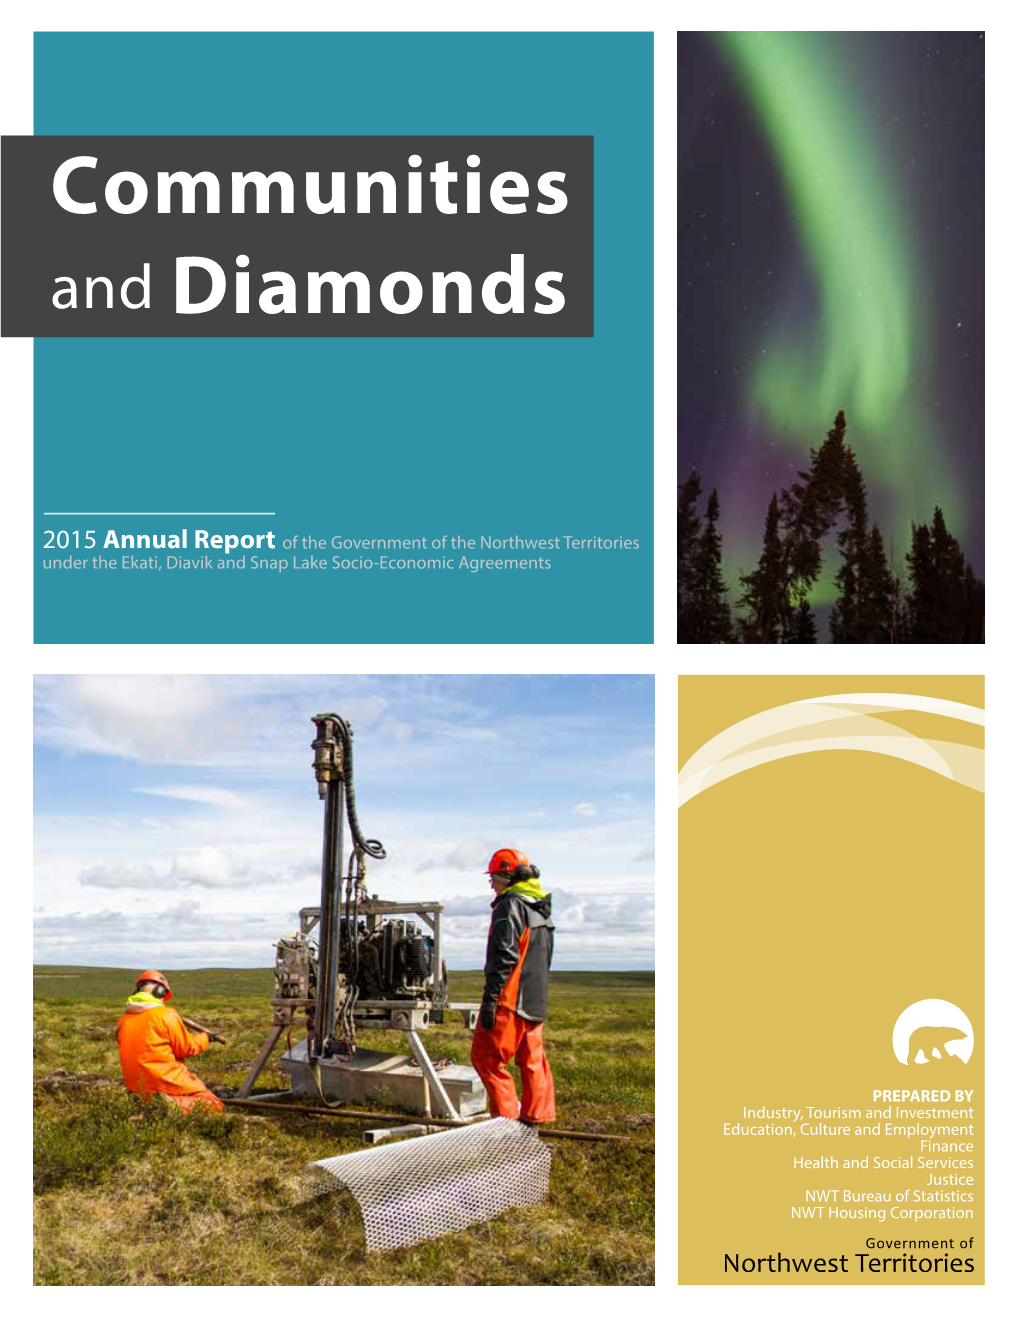 Communities and Diamonds Annual Report 2015